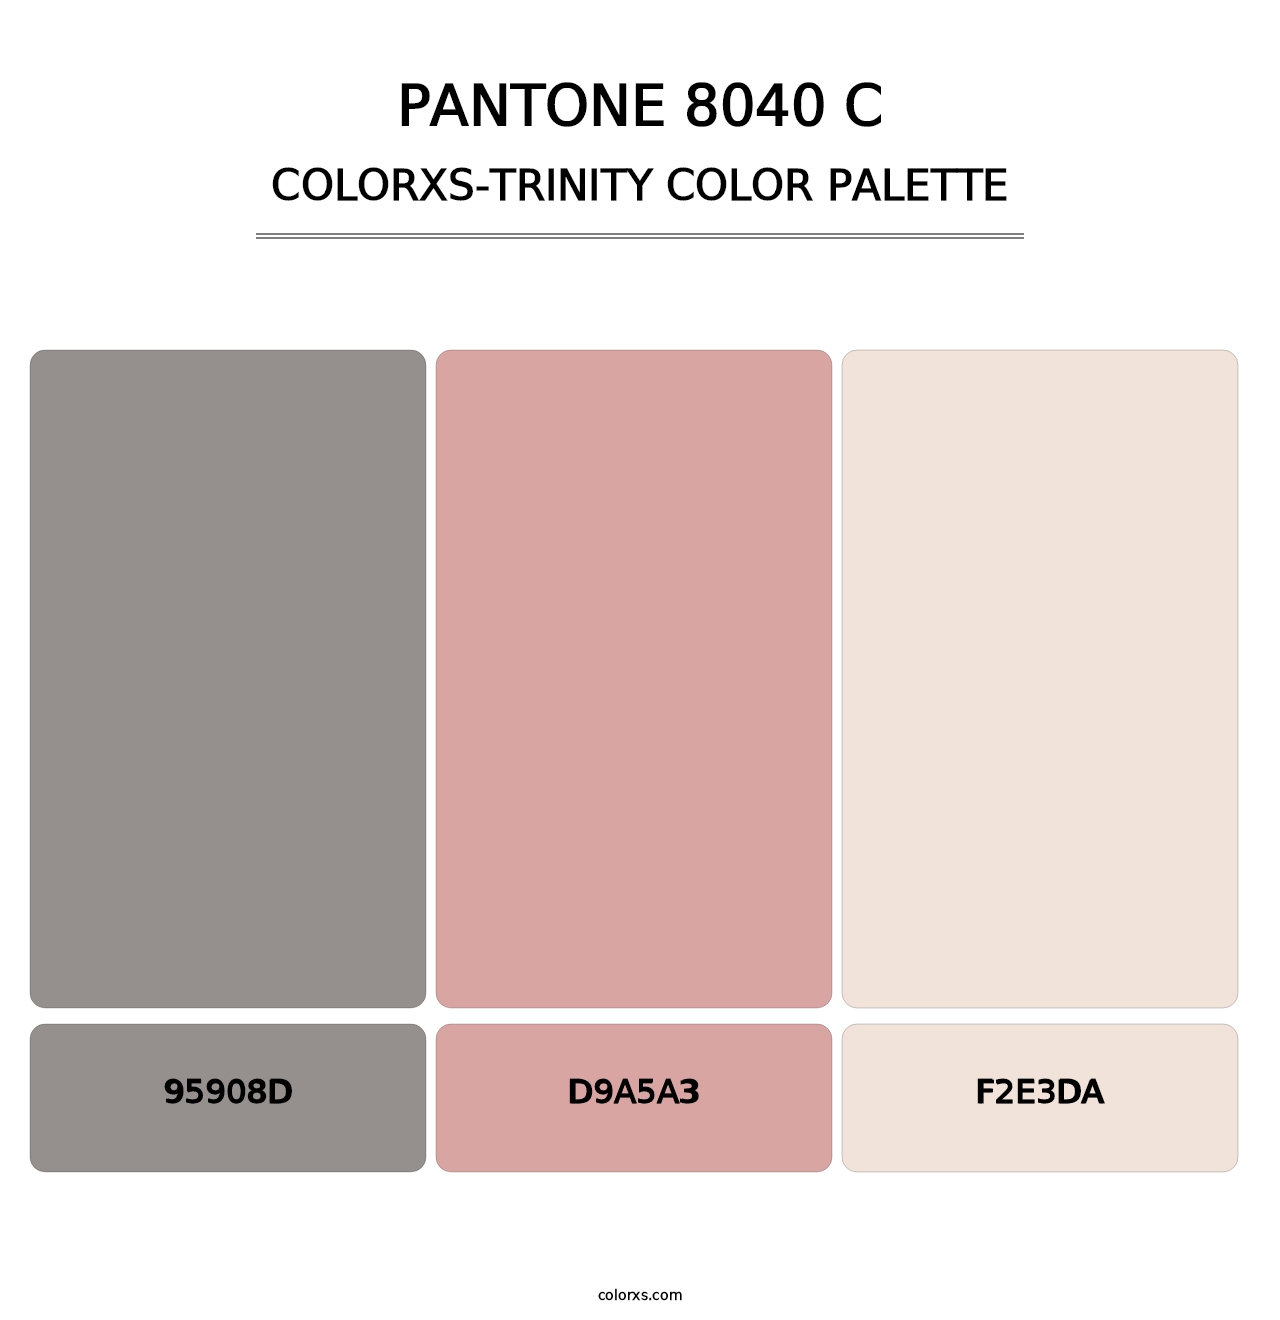 PANTONE 8040 C - Colorxs Trinity Palette